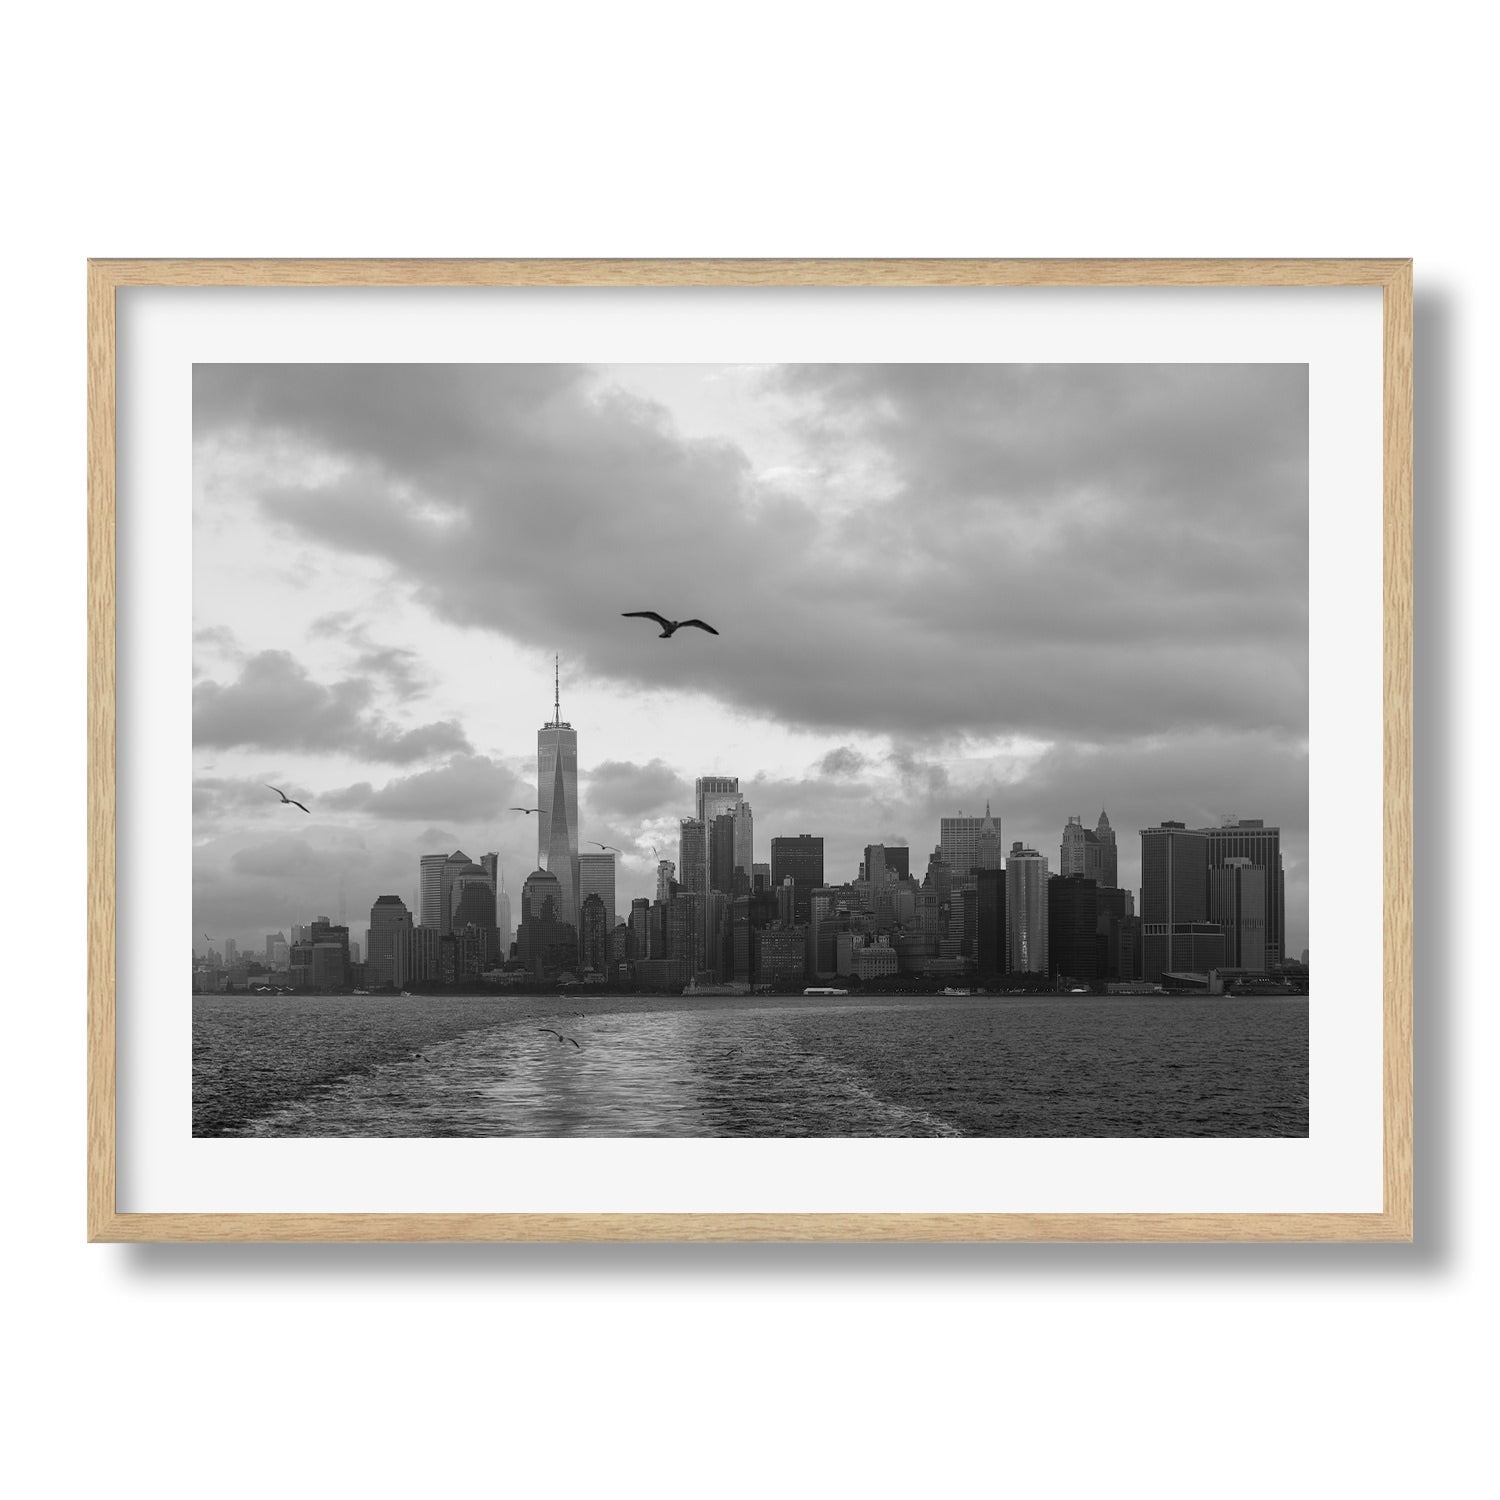 New York City from Hudson River in Black & White - Peter Yan Studio